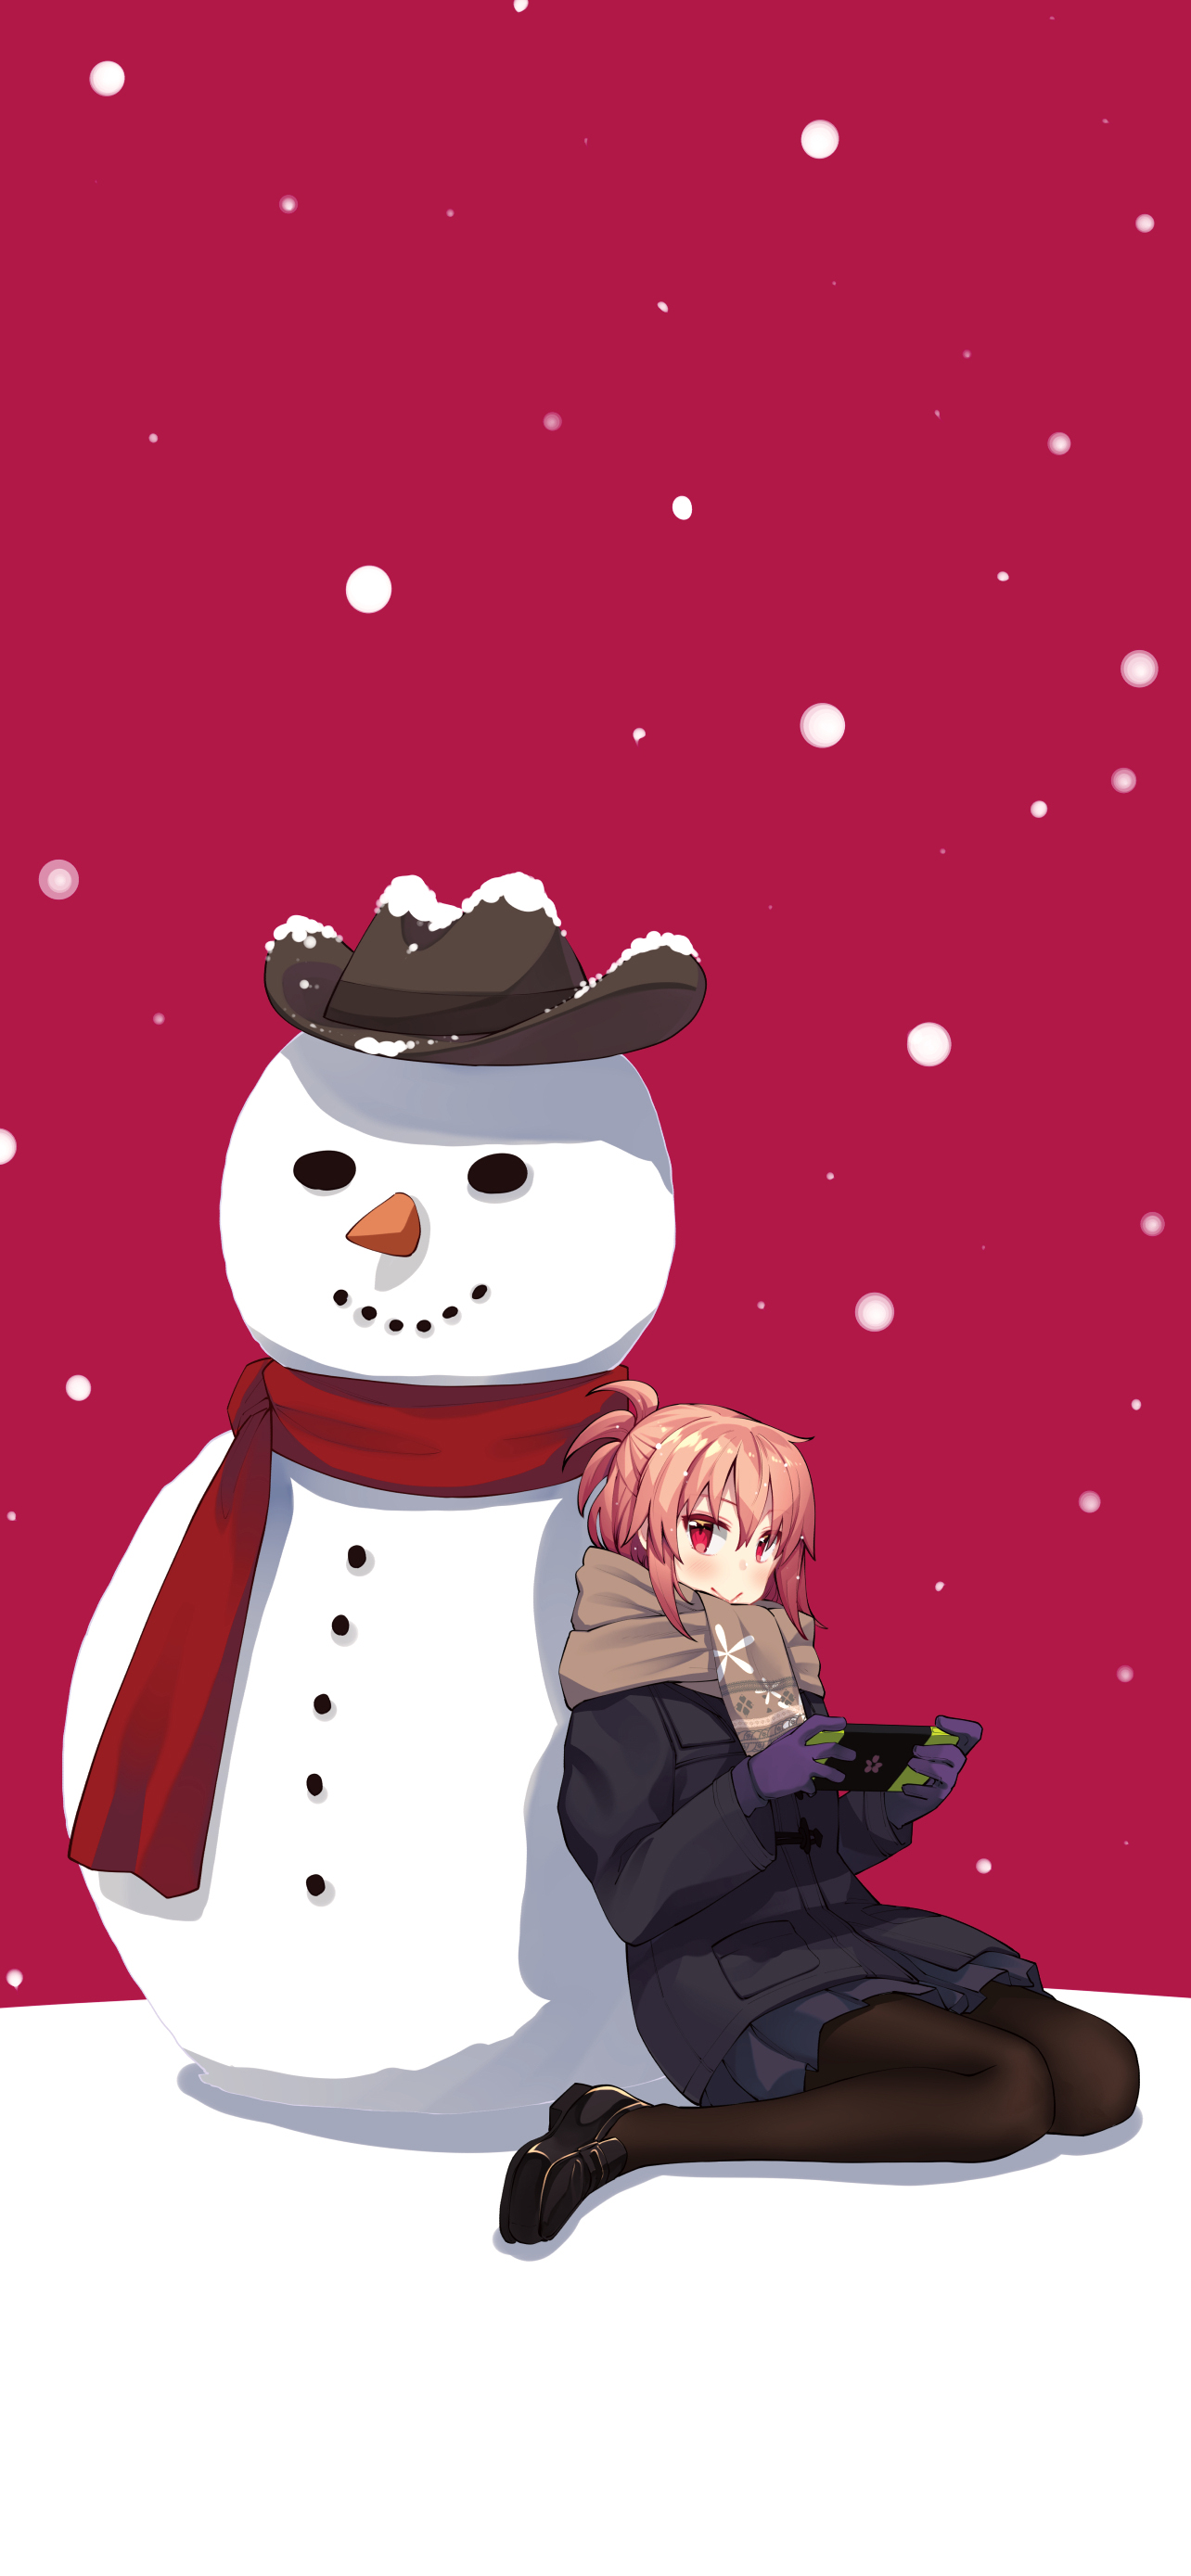 Anime 1284x2778 anime anime girls digital art artwork 2D portrait display red eyes snowflakes smiling snowman kneeling pantyhose coats Akino Sora